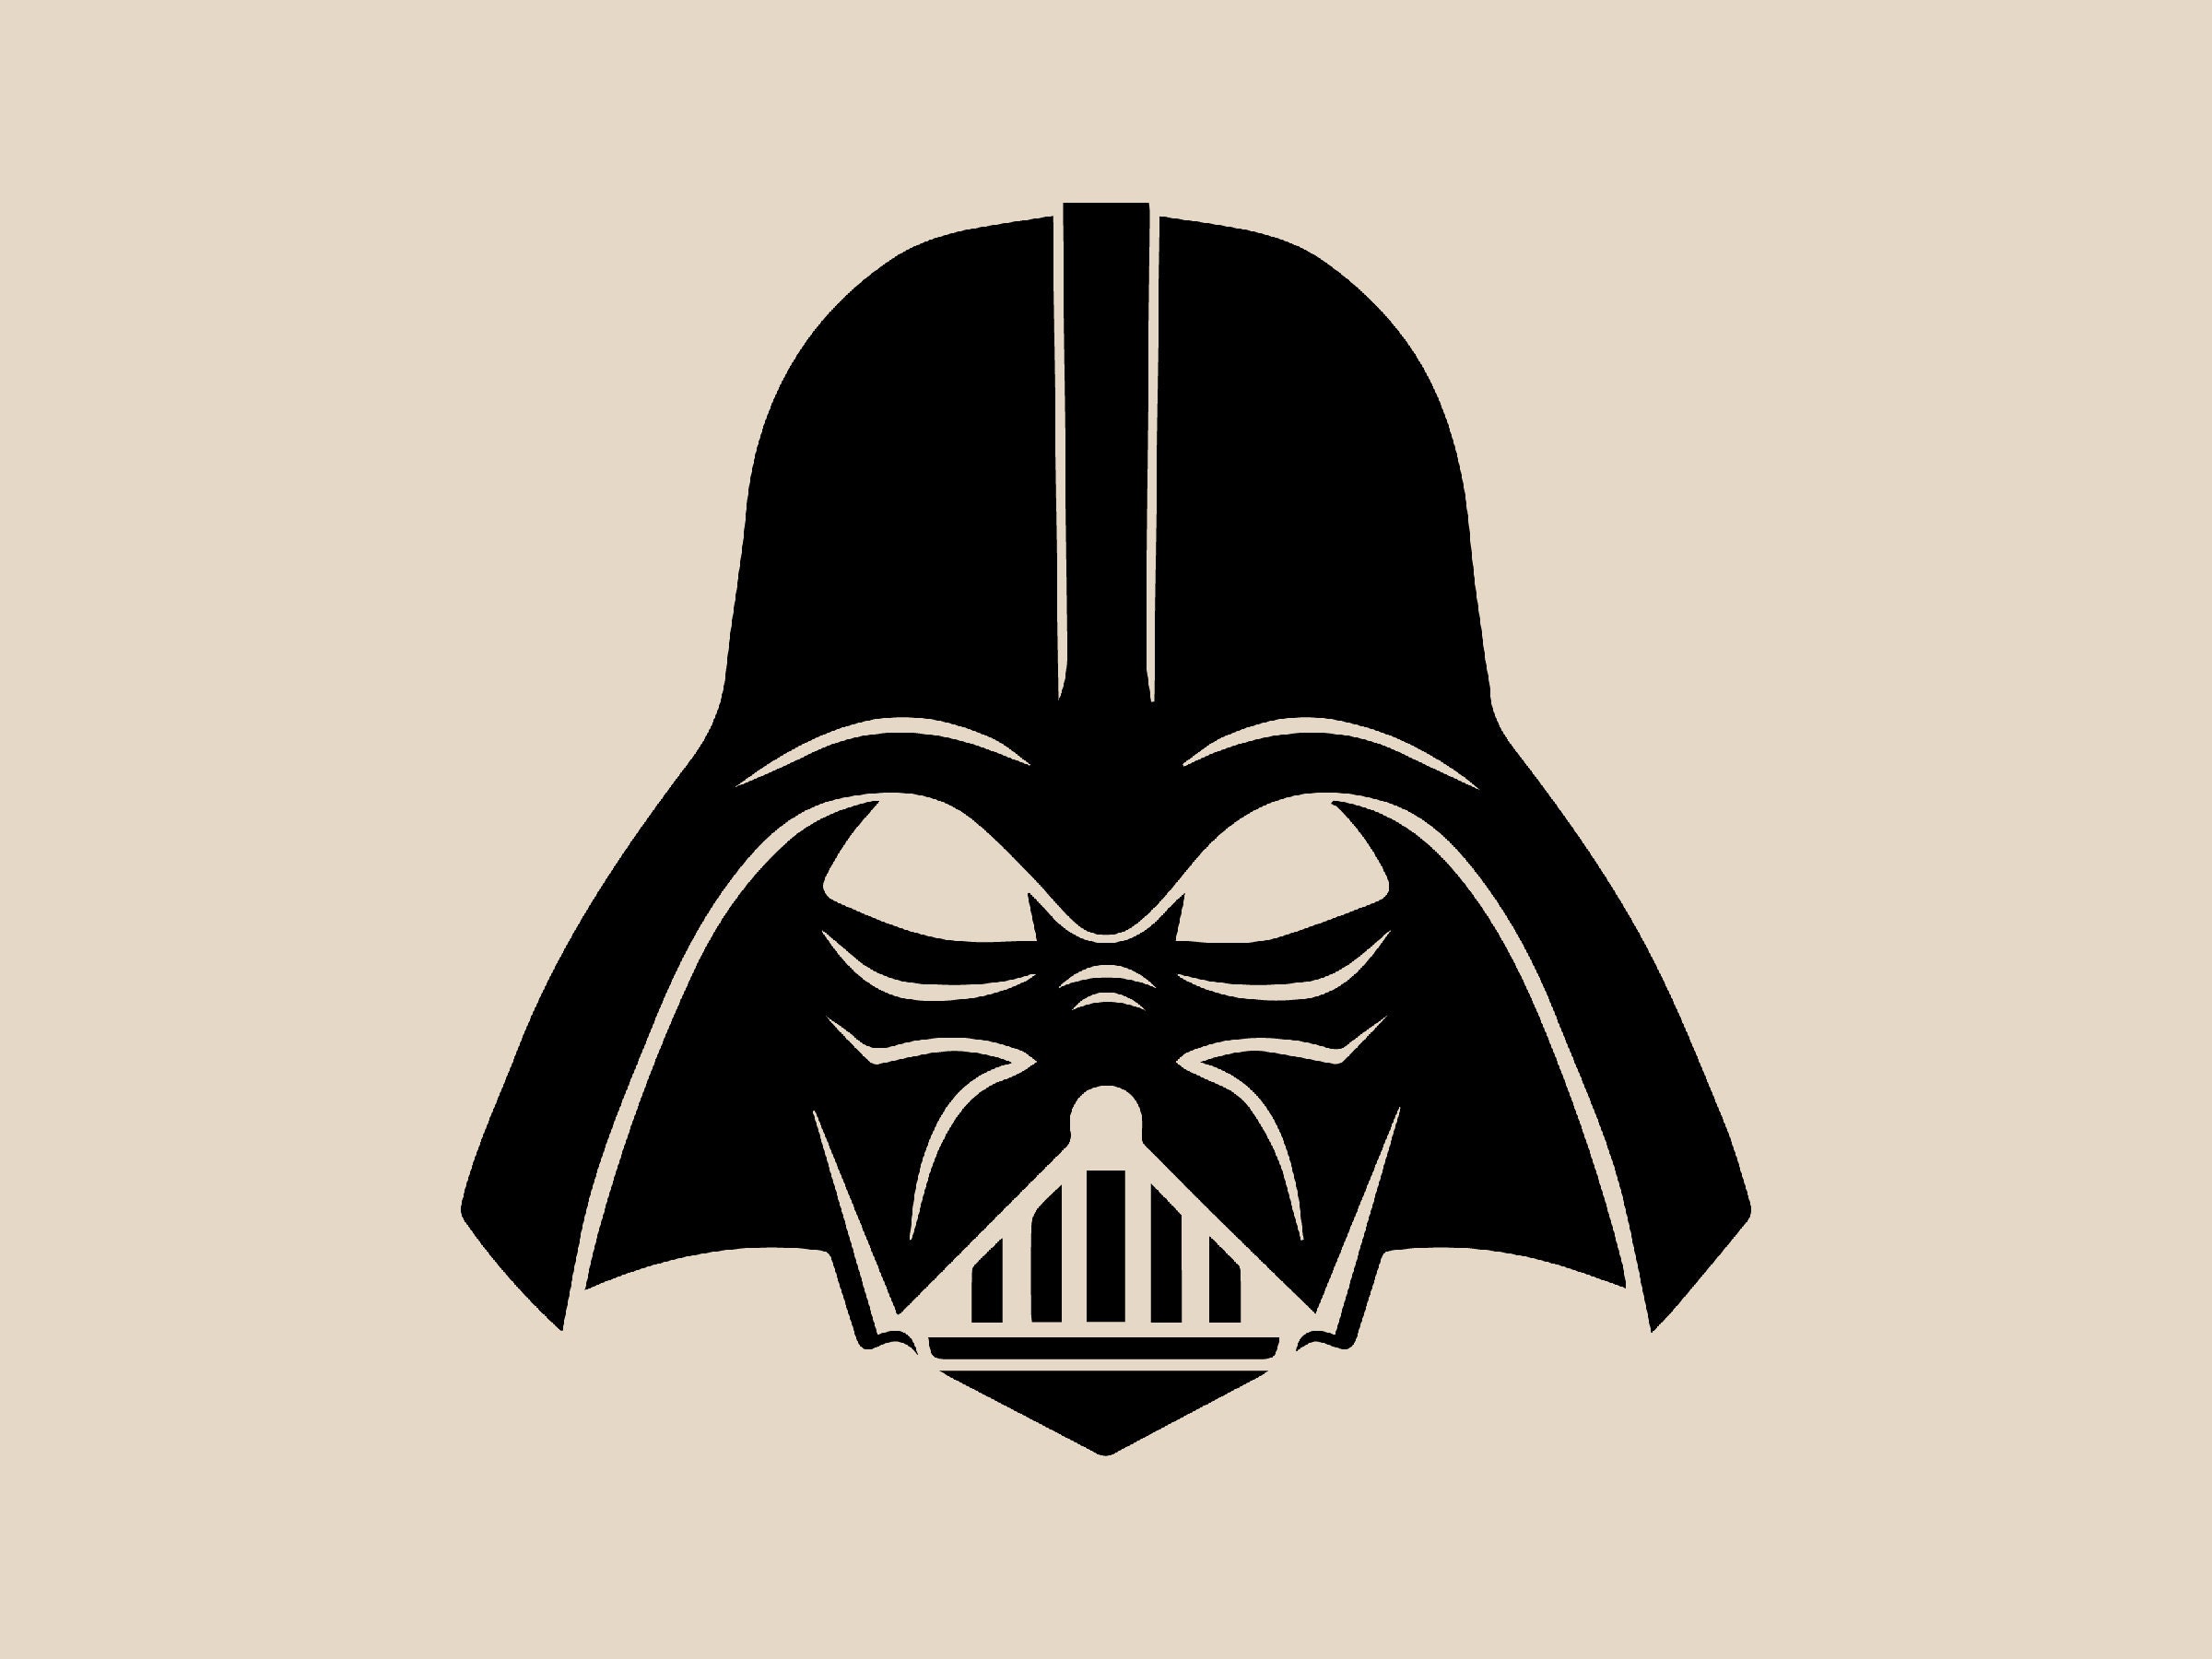 Disney Star Wars Vader Head Die Cut Helmet Patch Officially Licensed Iron on